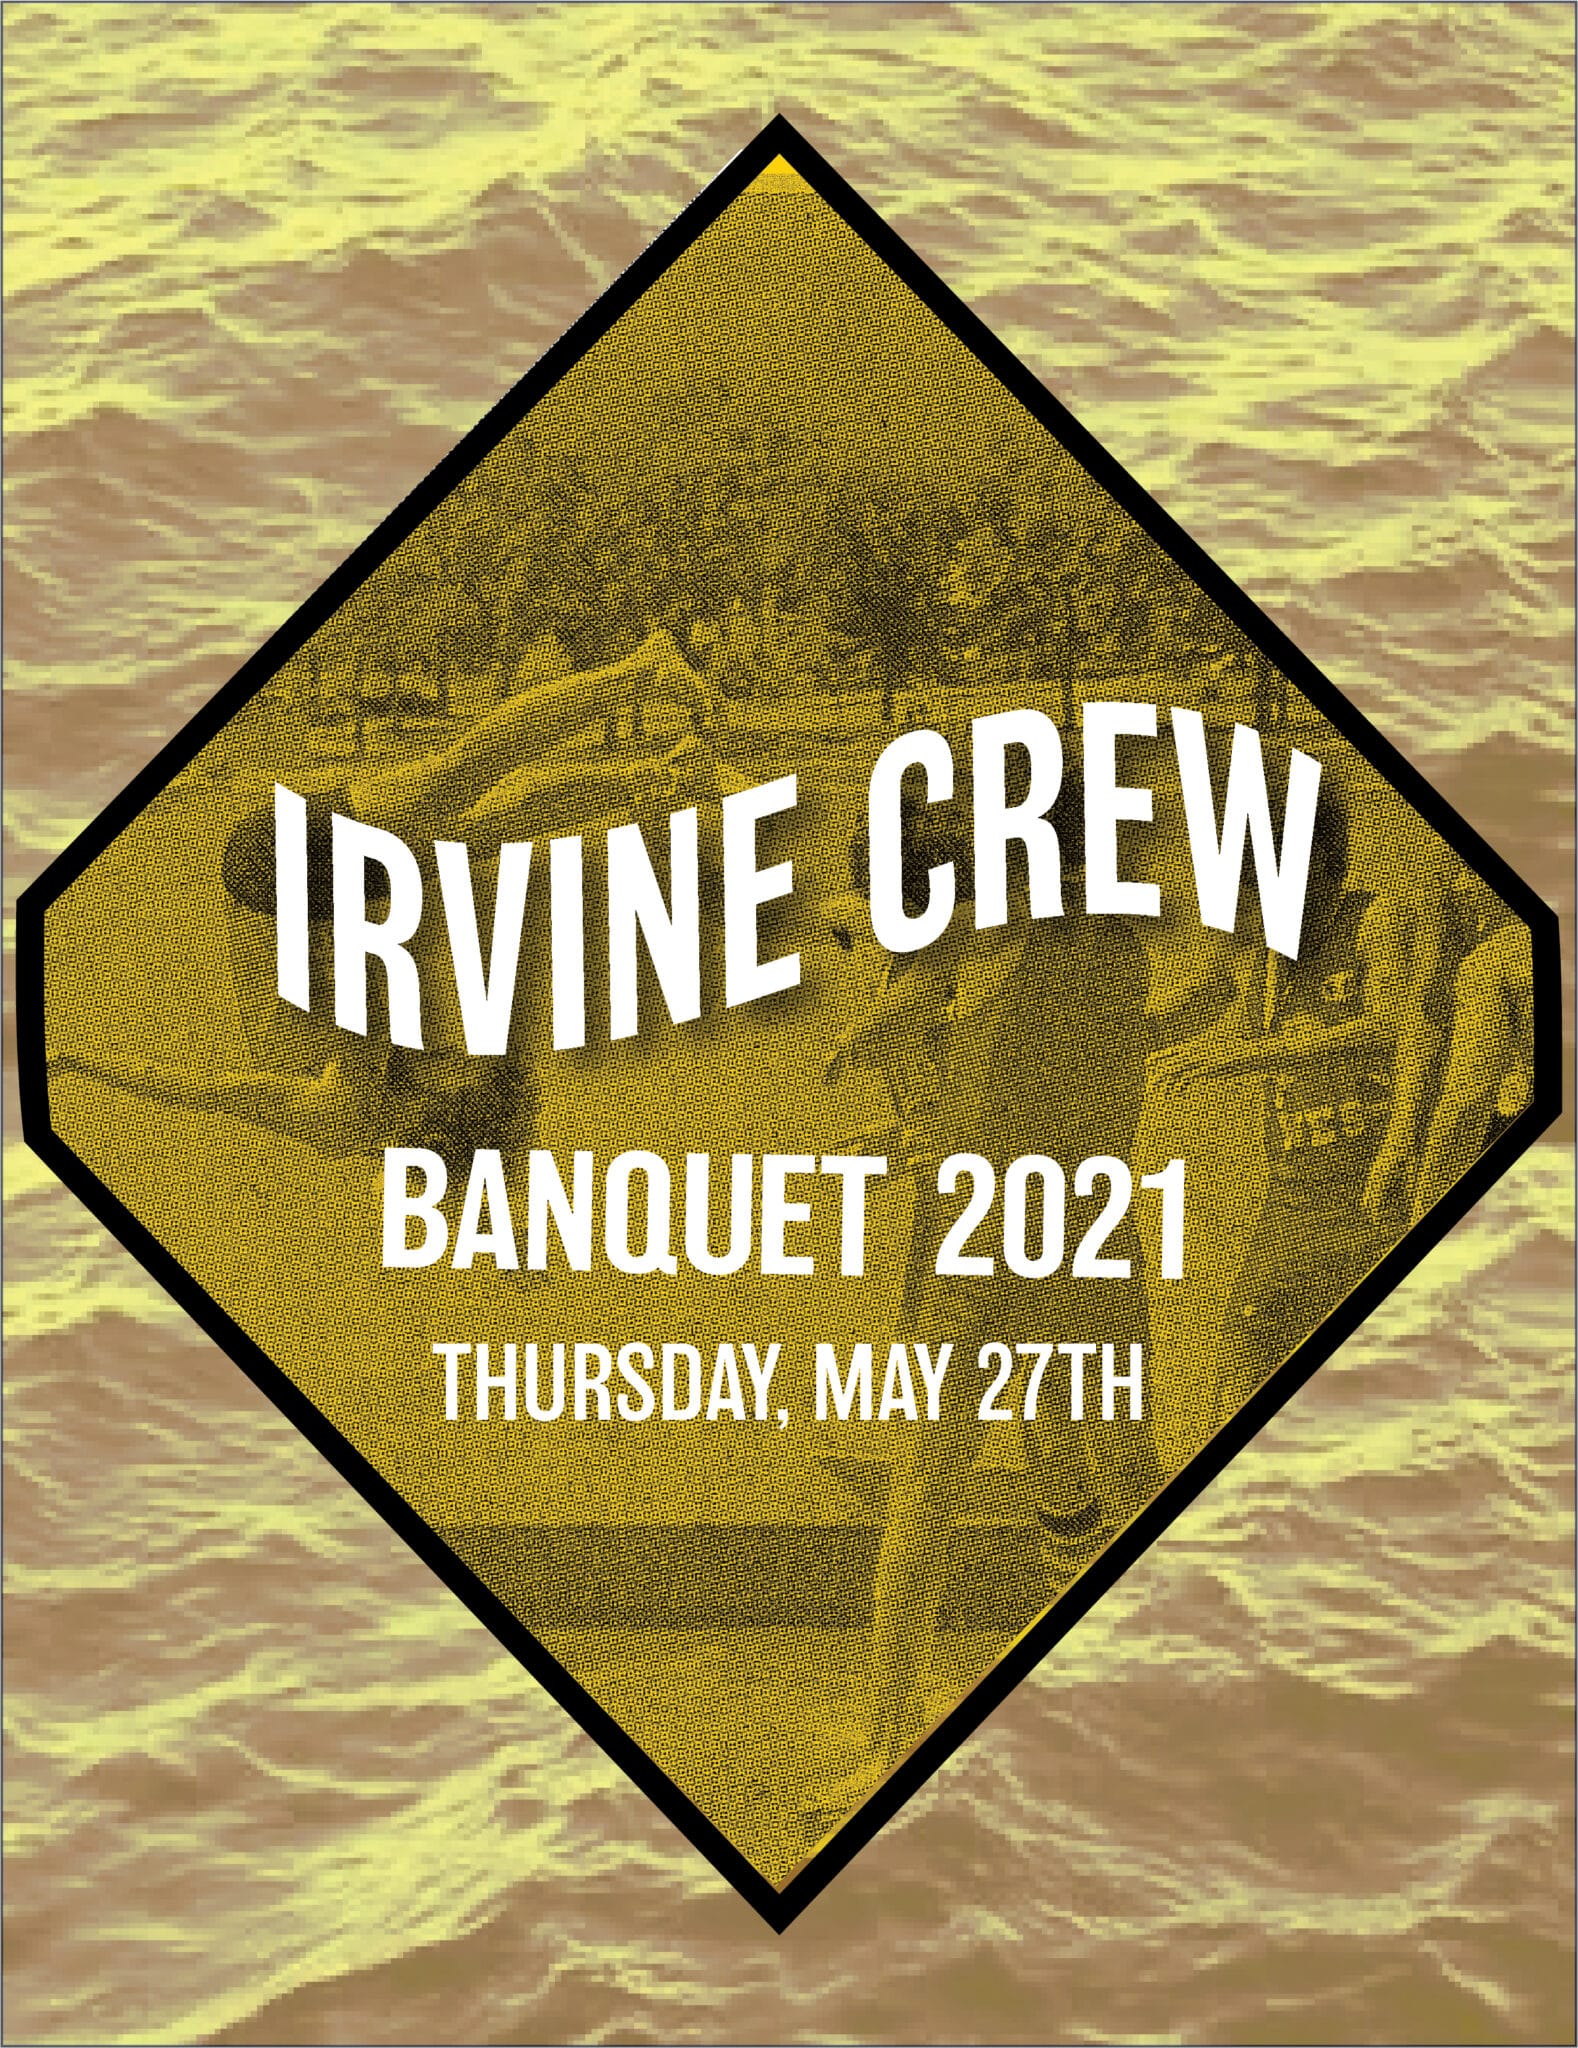 IRVINE CREW BANQUET 2021